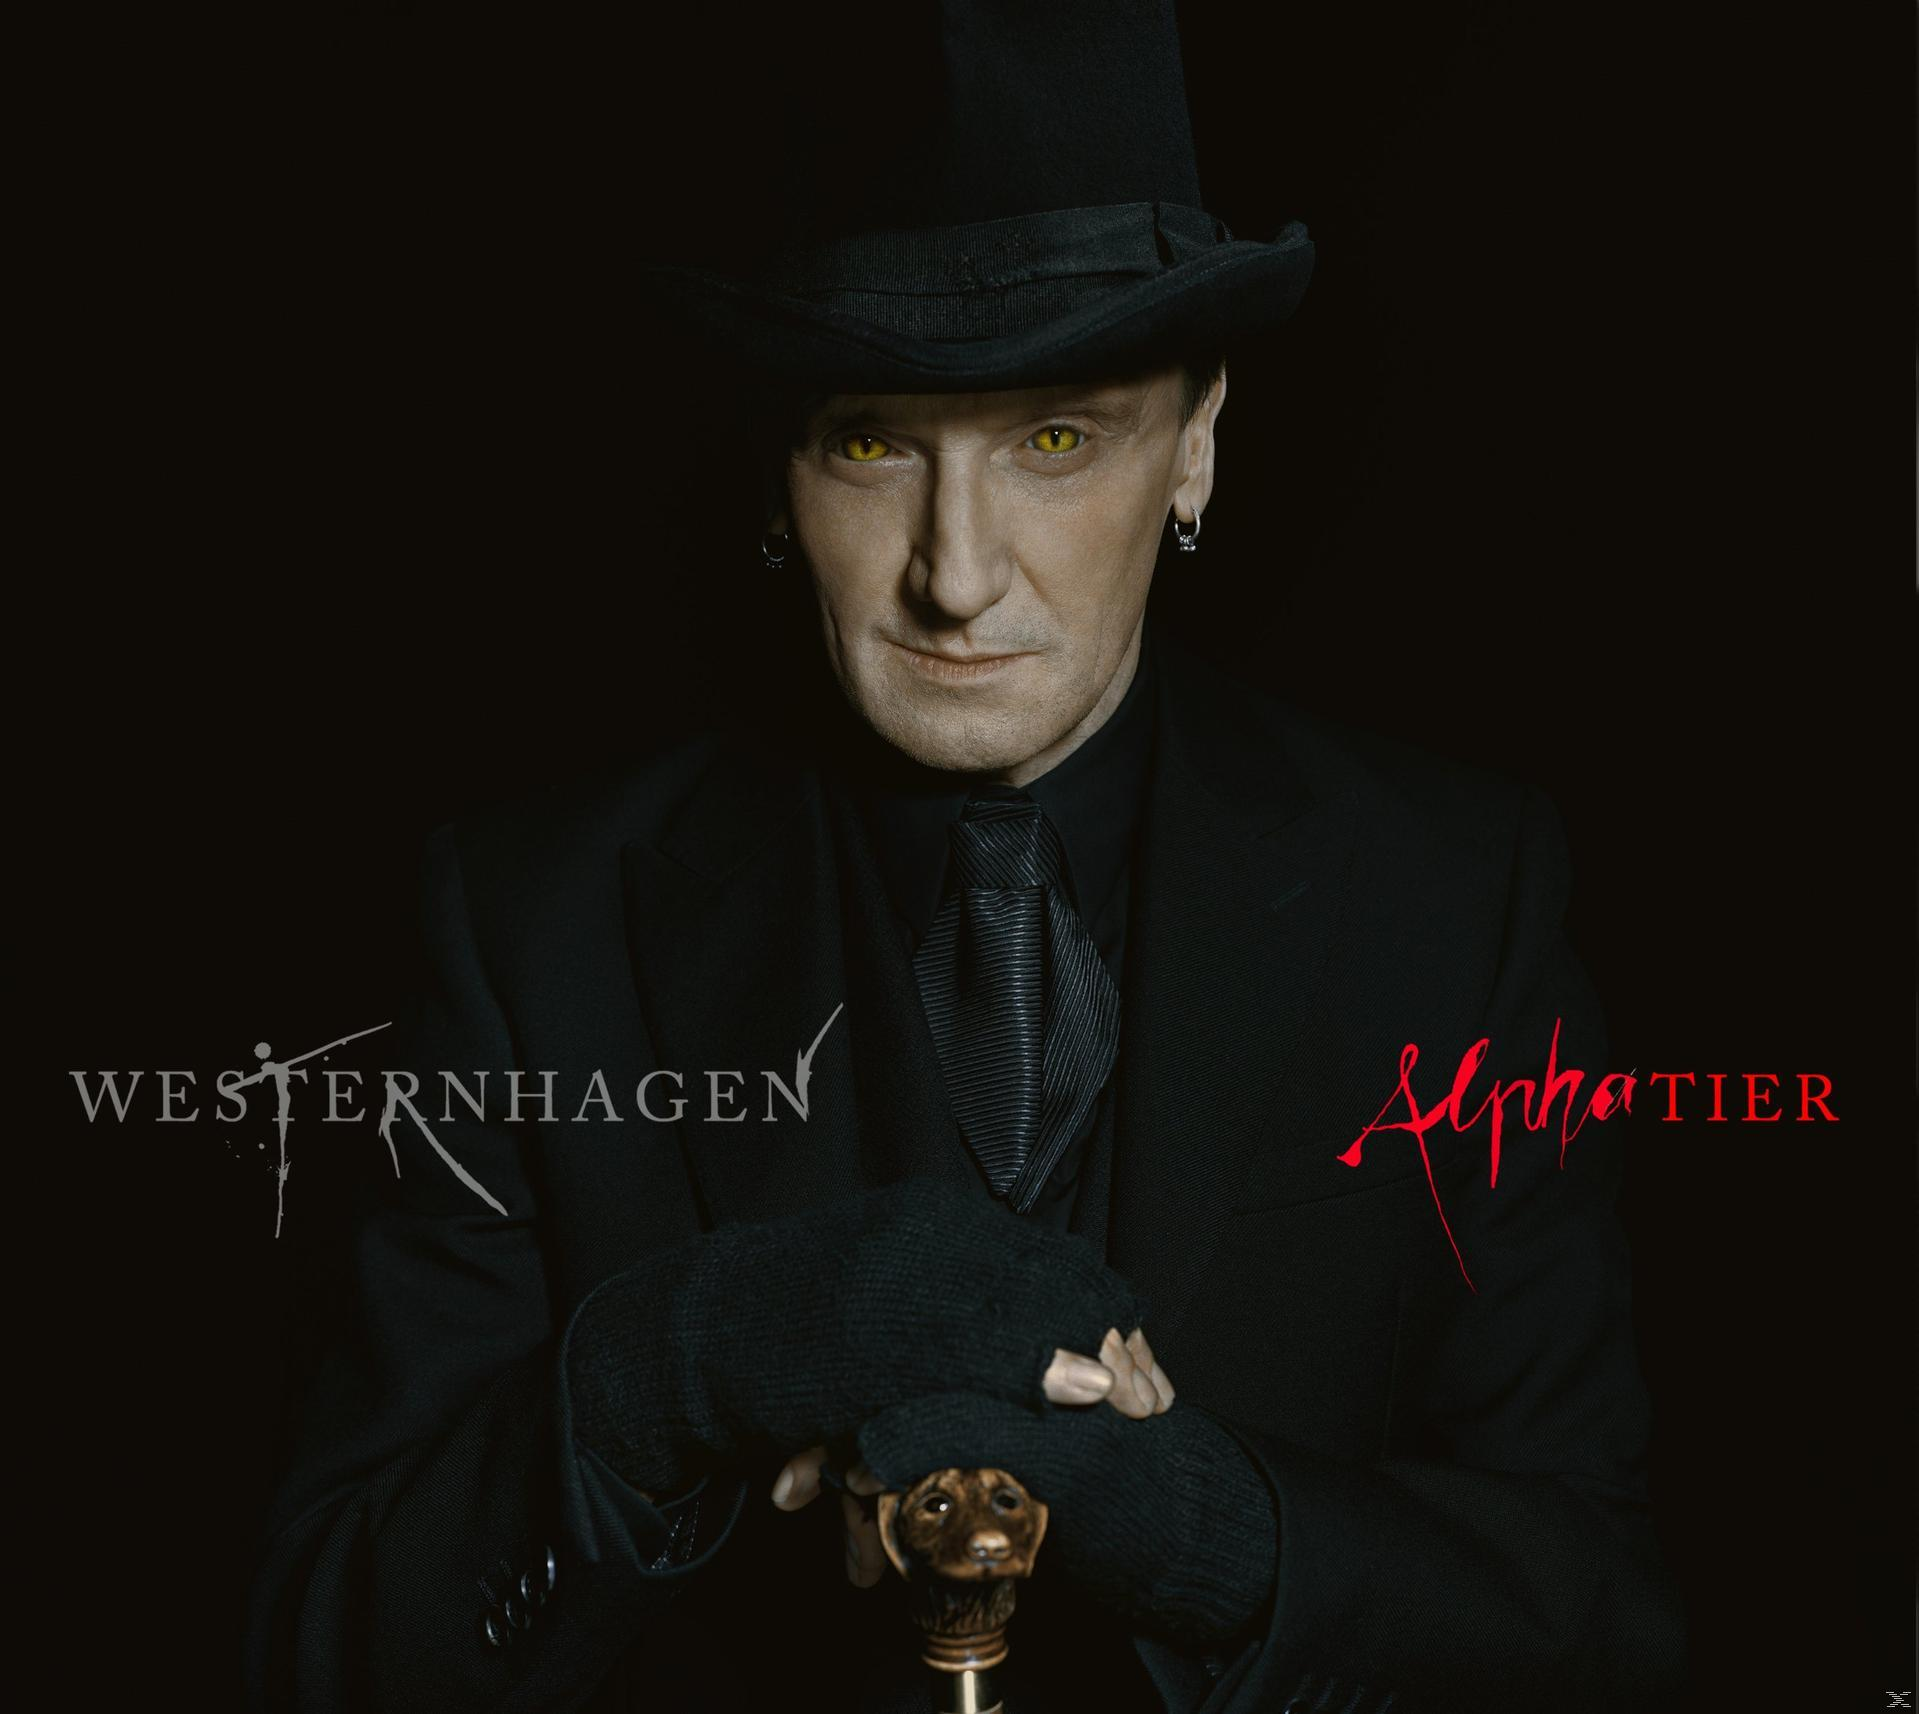 Marius Müller-Westernhagen - Deluxe DVD - Alphatier (CD + Edition) Video) (Limited